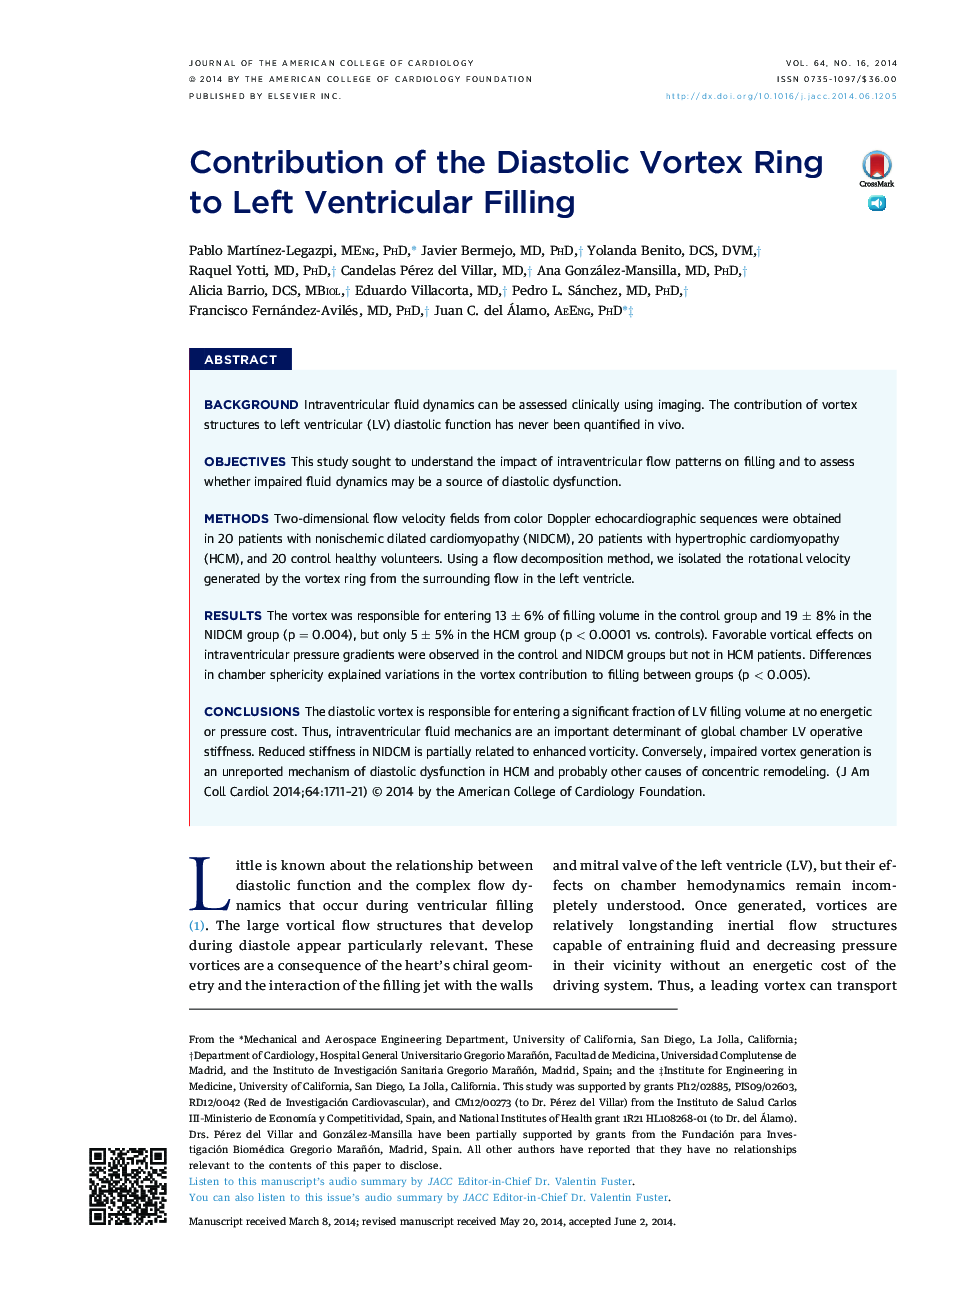 Contribution of the Diastolic Vortex Ring to Left Ventricular Filling